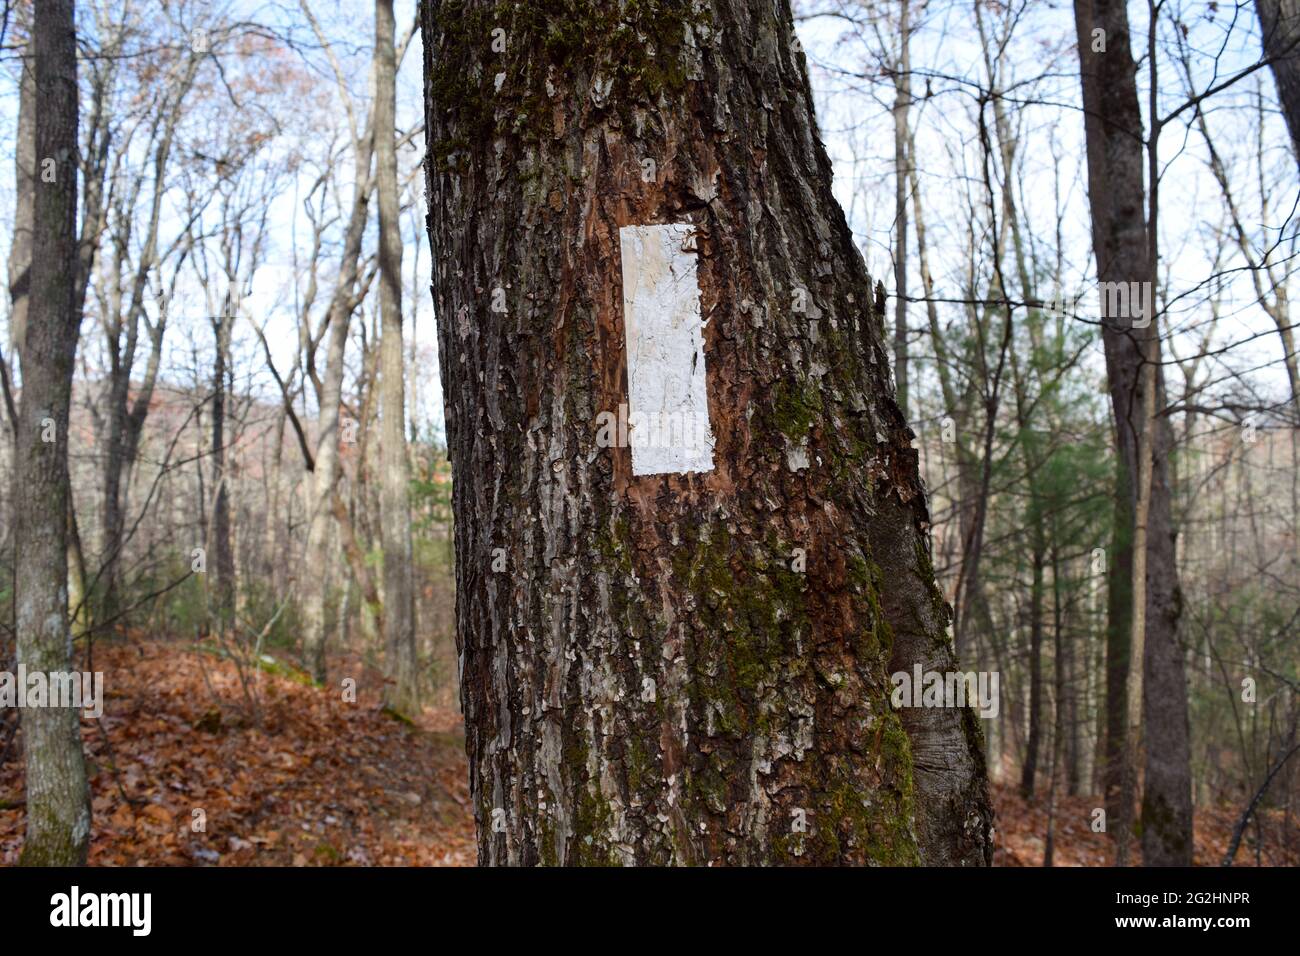 Appalachian Trail Blaze (White rectangular trail marker on tree) Stock Photo